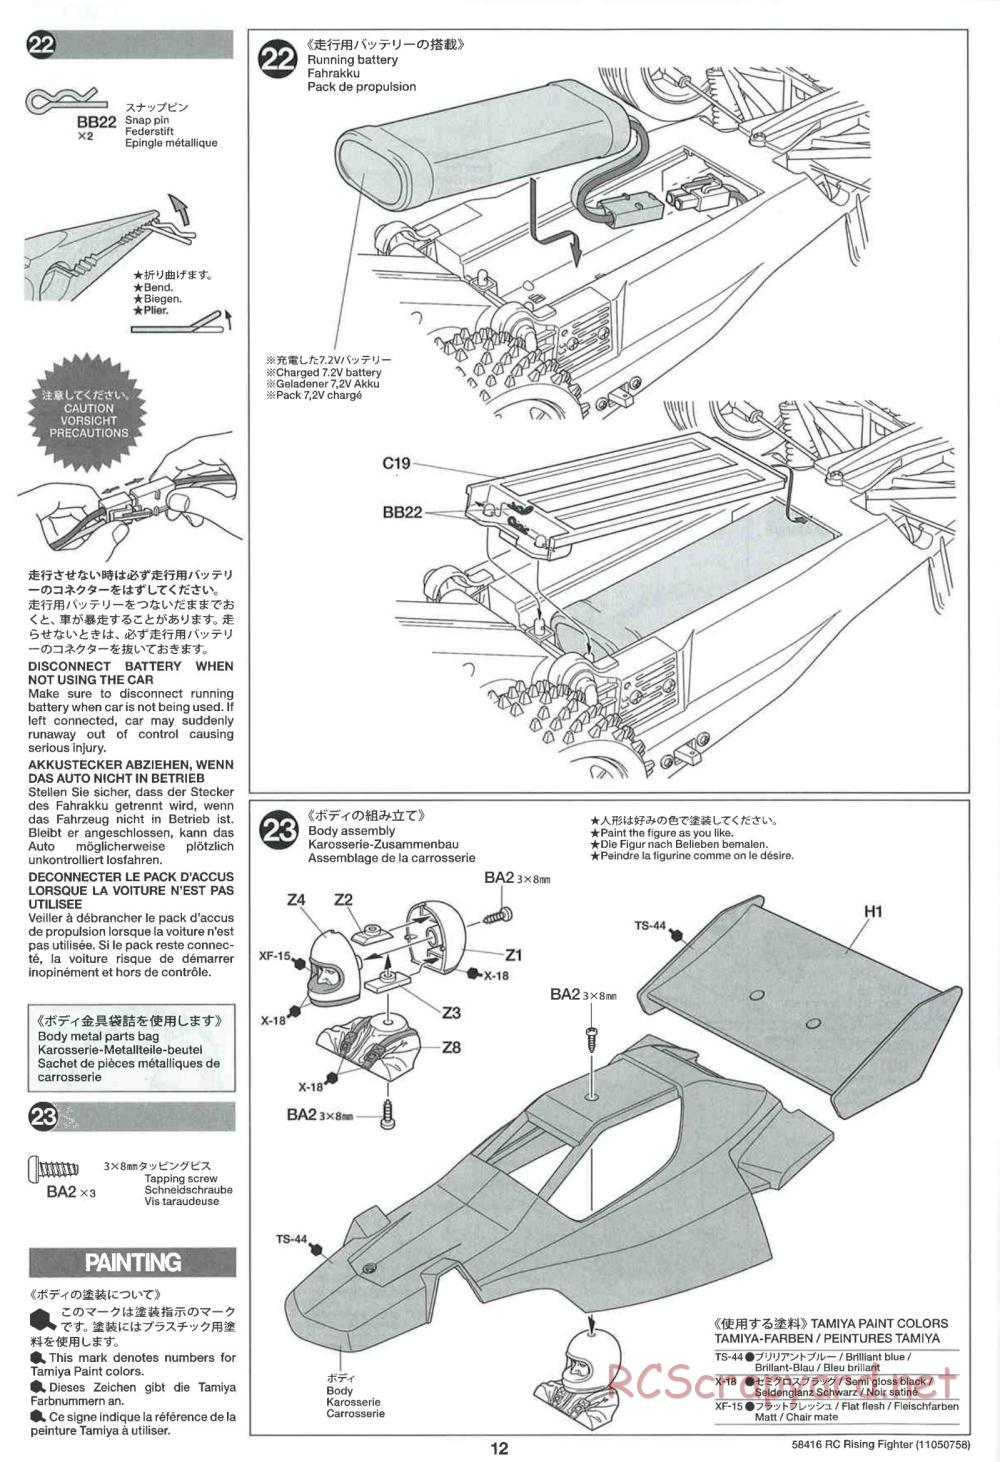 Tamiya - Rising Fighter Chassis - Manual - Page 12